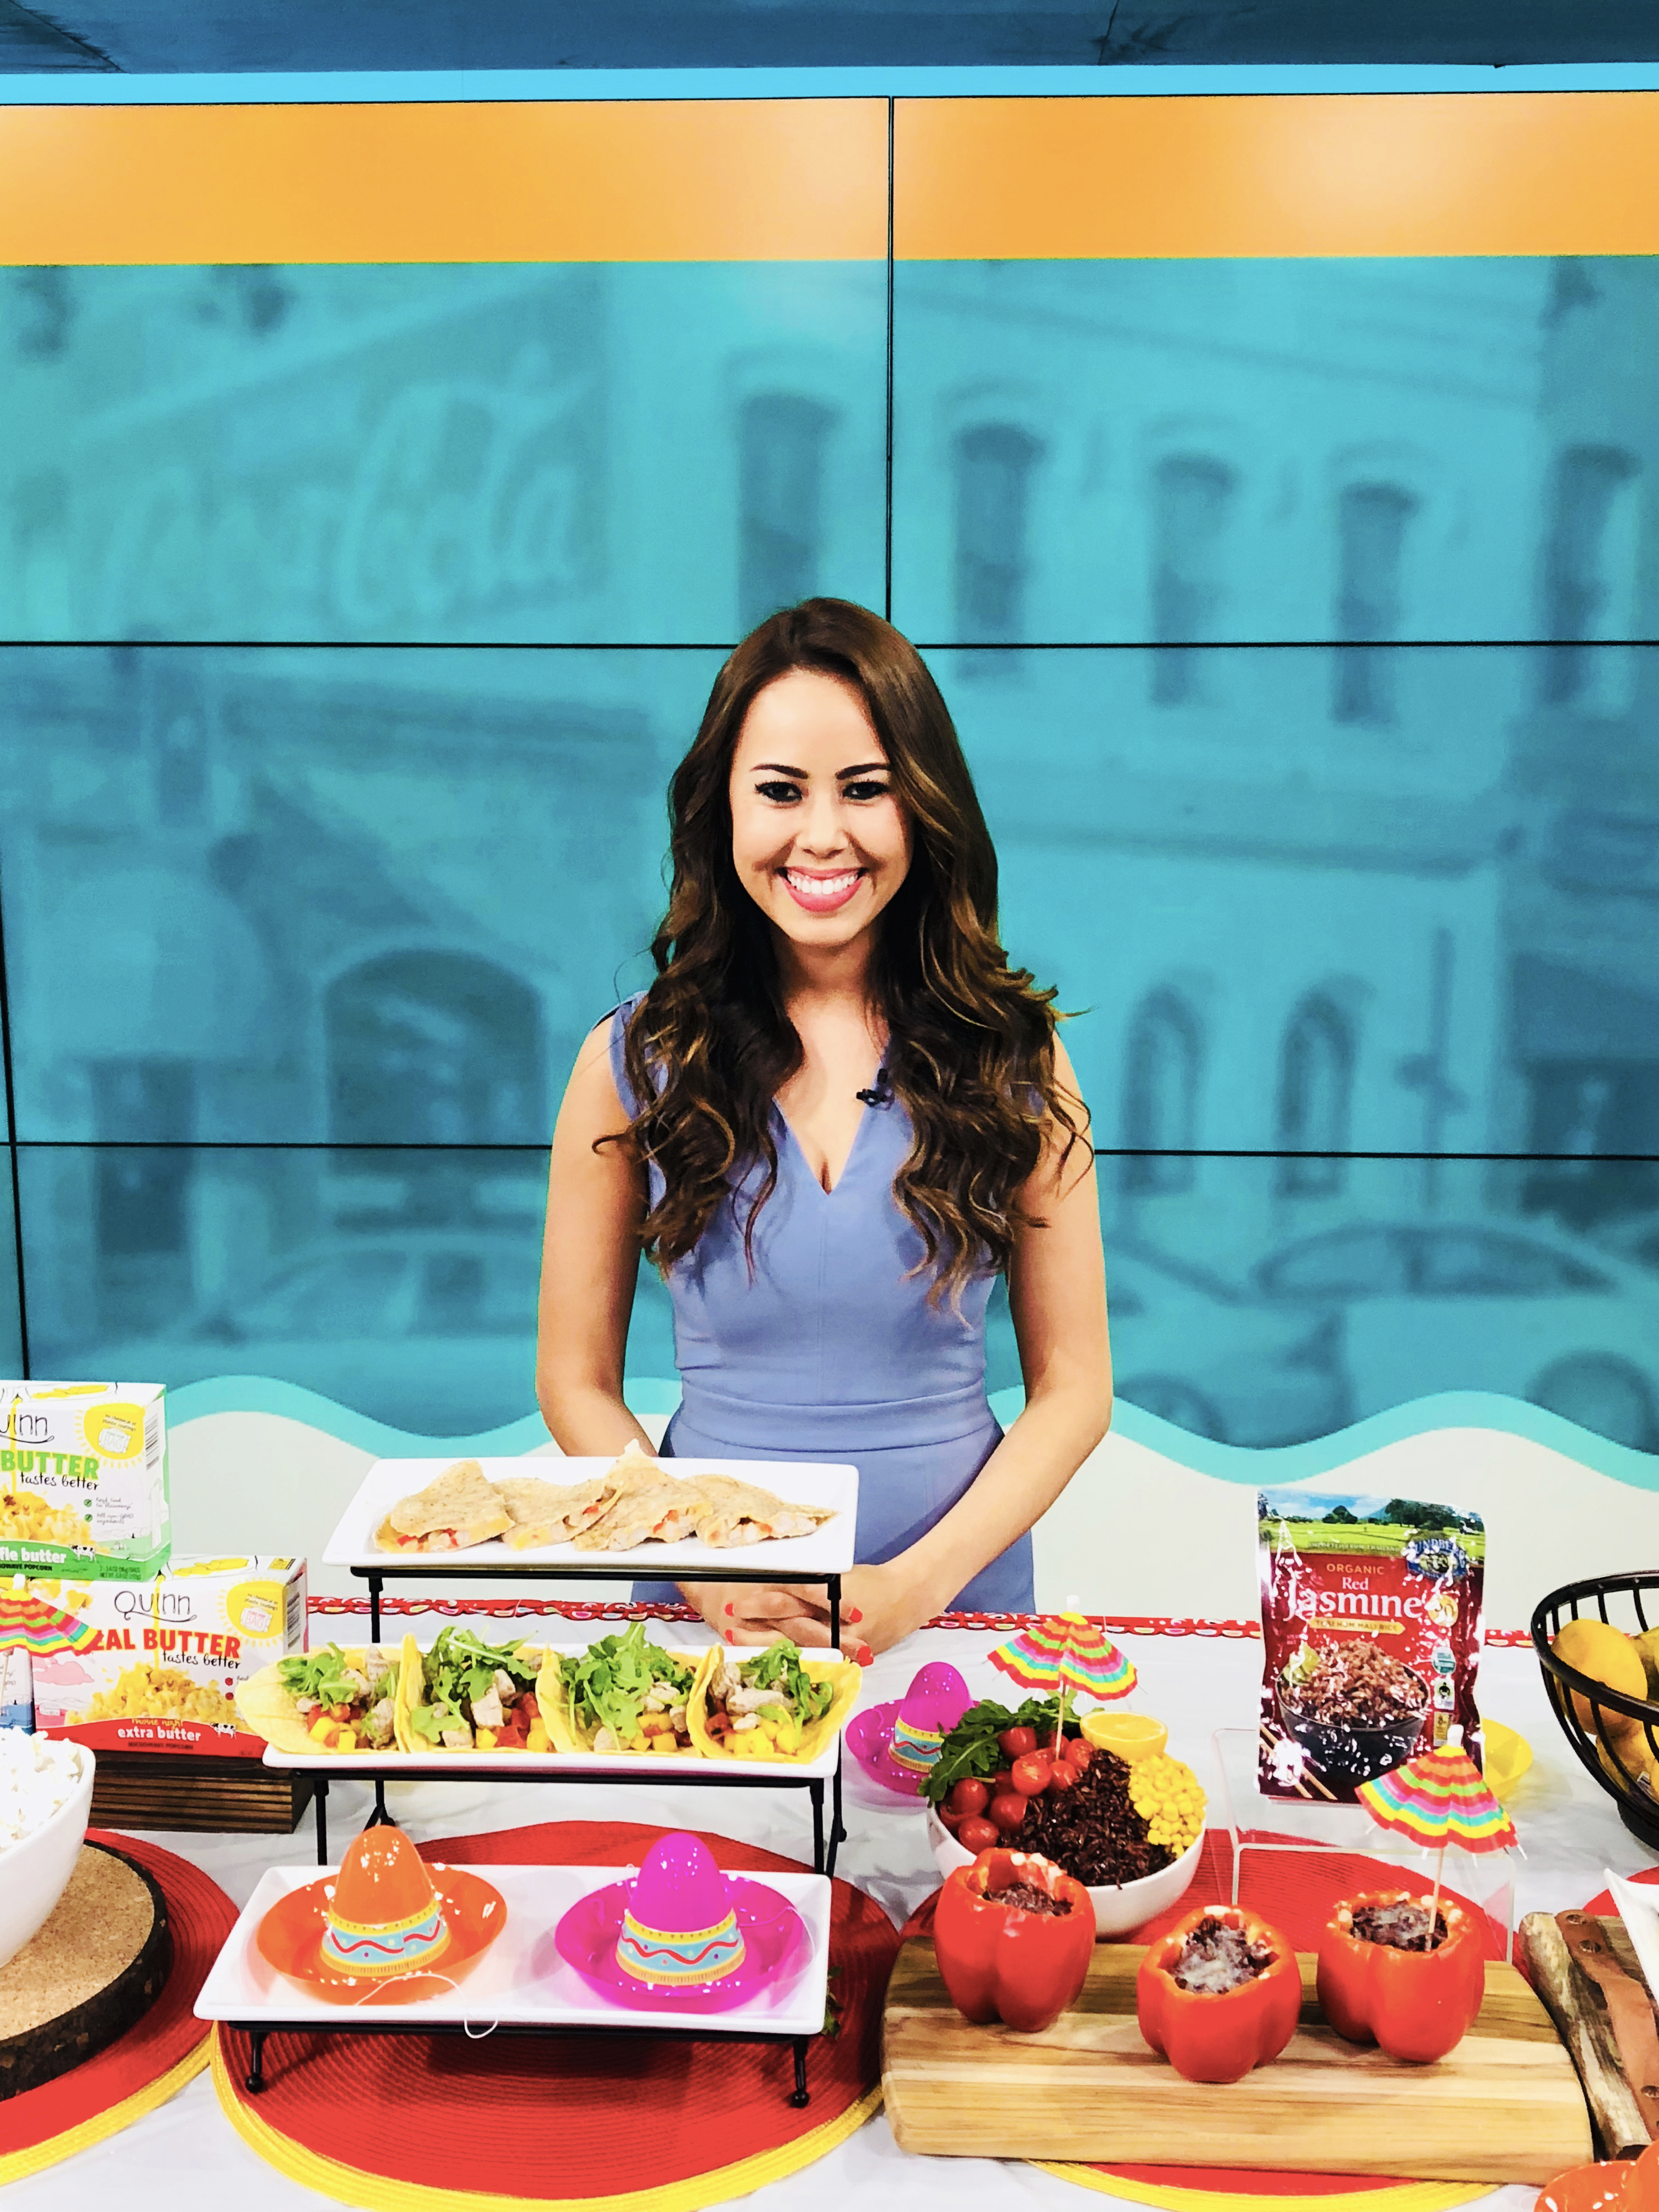 TV Dietitian Nutritionist Mia Syn Media Nutrition Expert